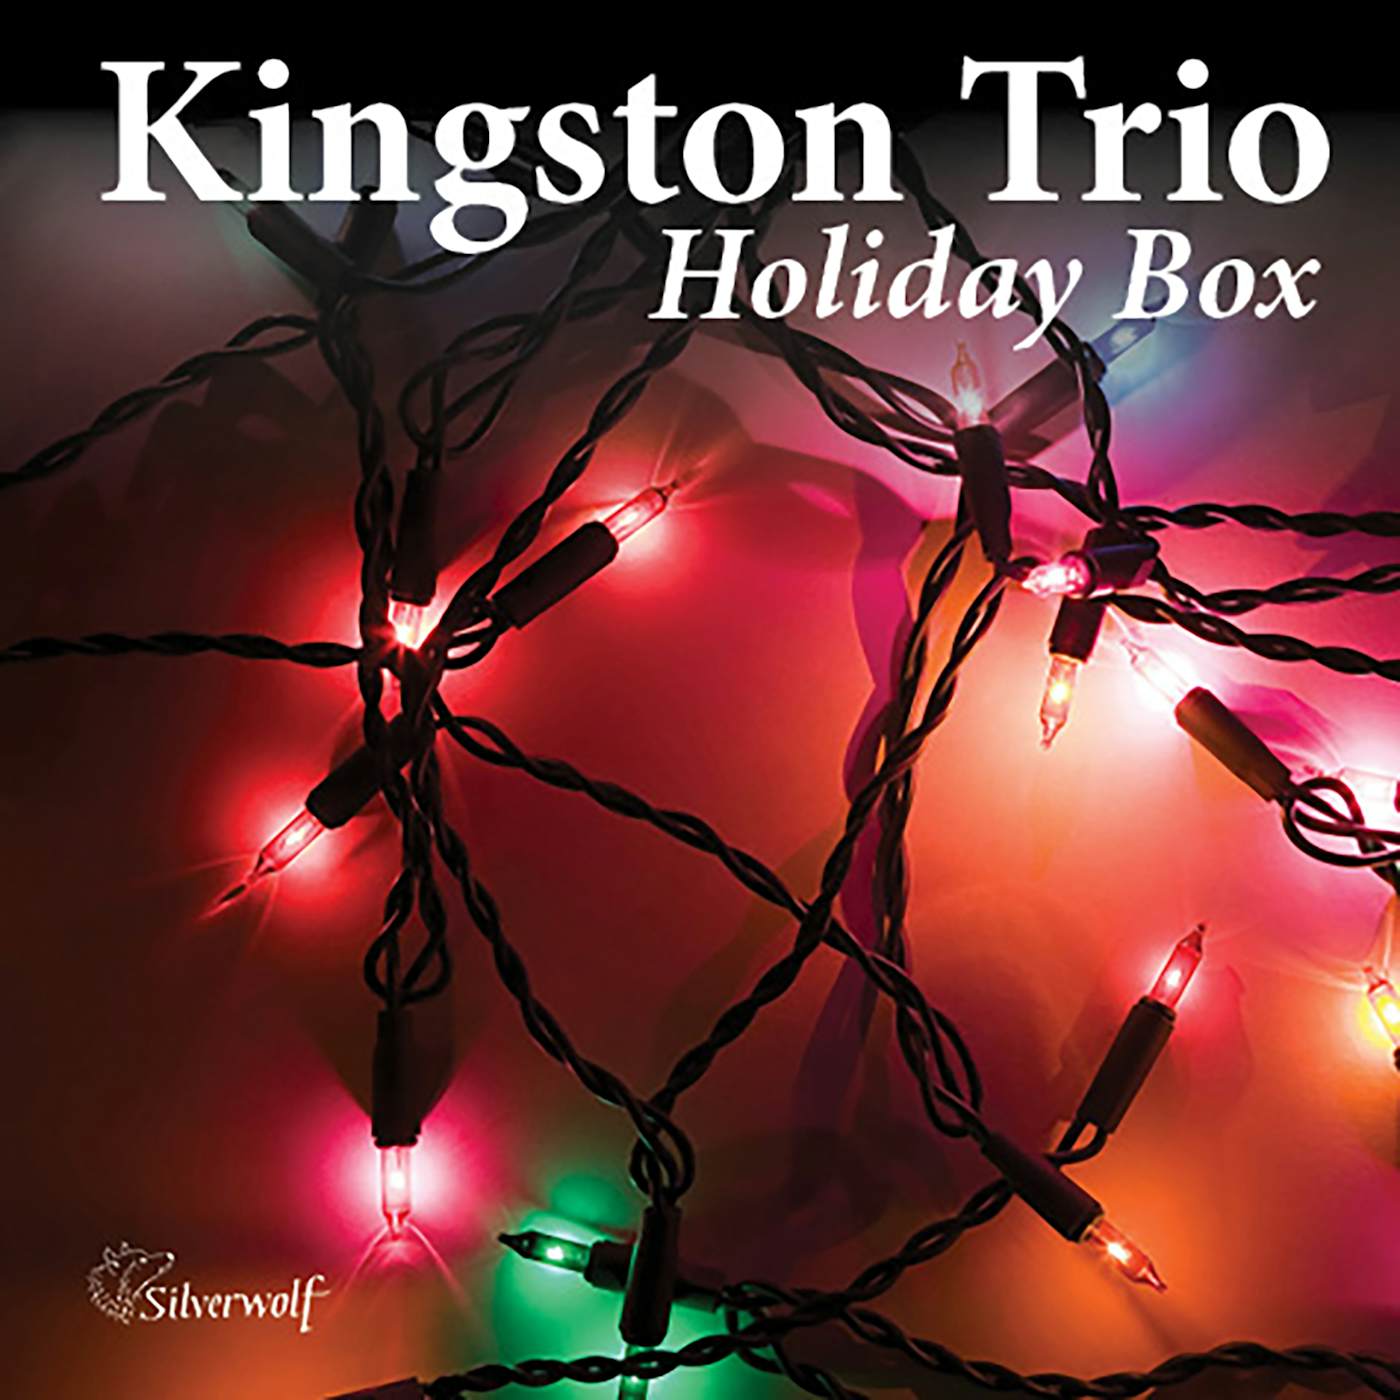 The Kingston Trio HOLIDAY CD